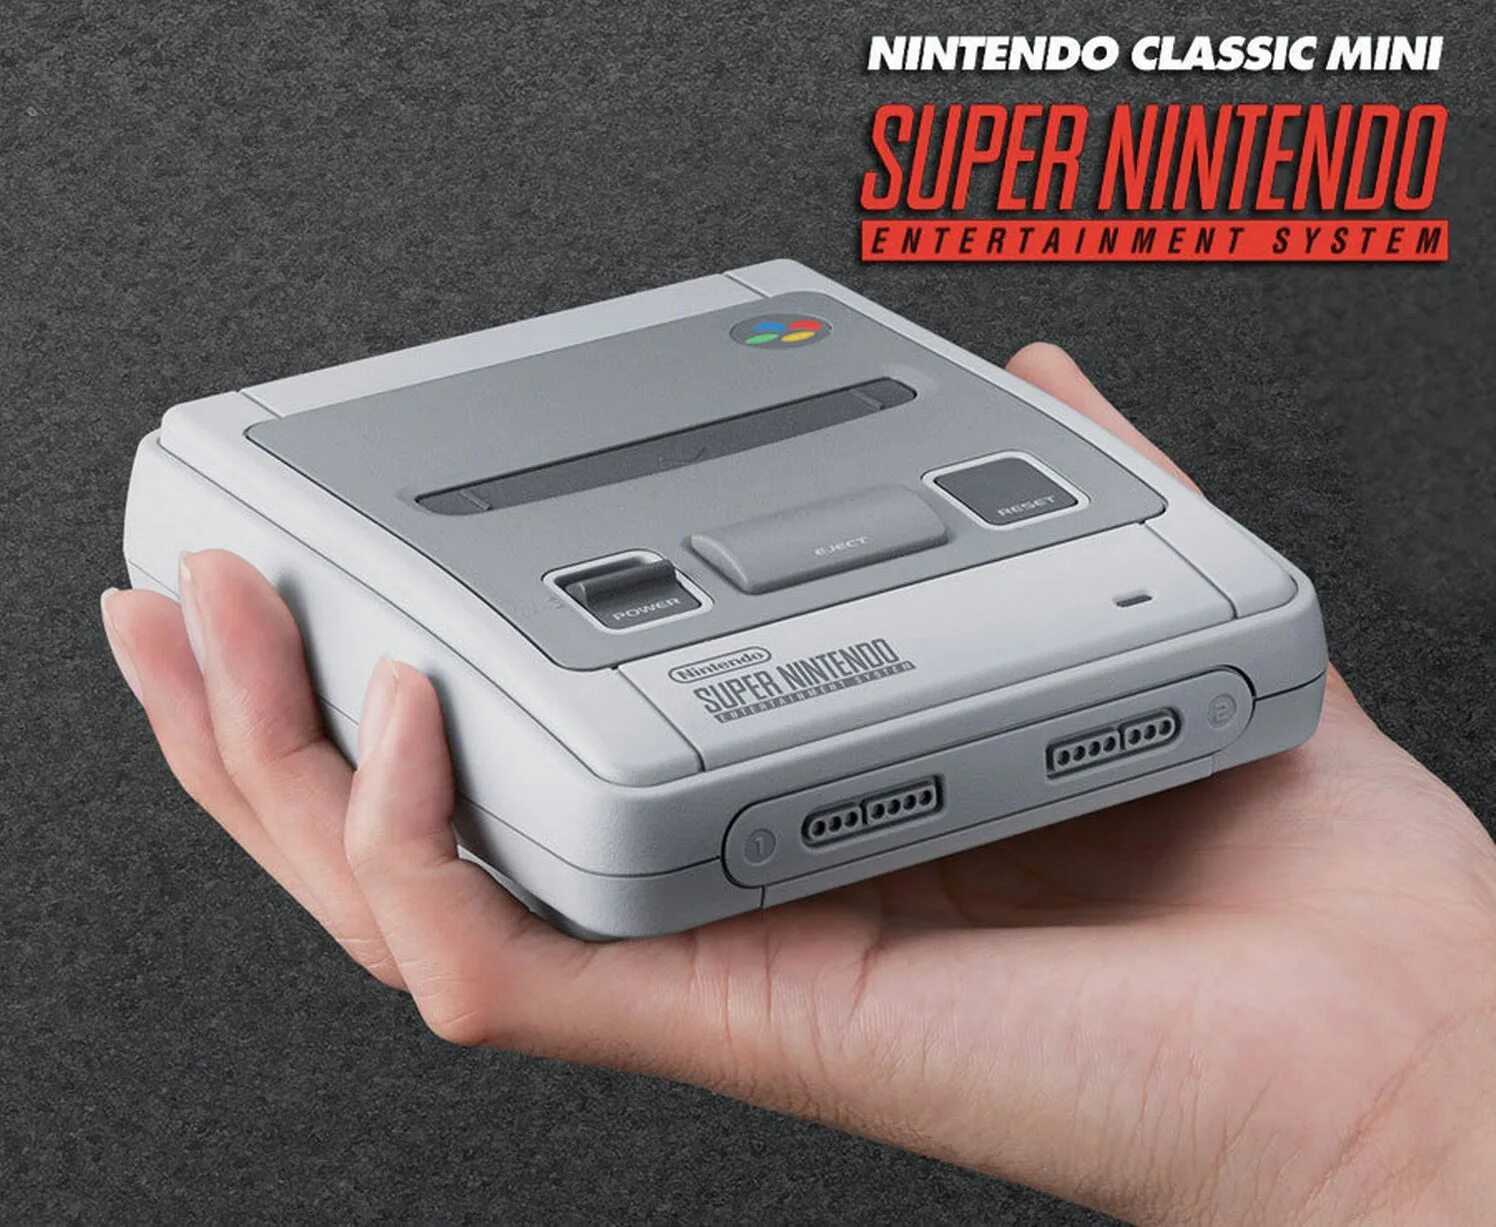 Snes Classic Mini. Nintendo Mini. Nintendo Classic Mini. Nintendo Classic. Super nintendo classic